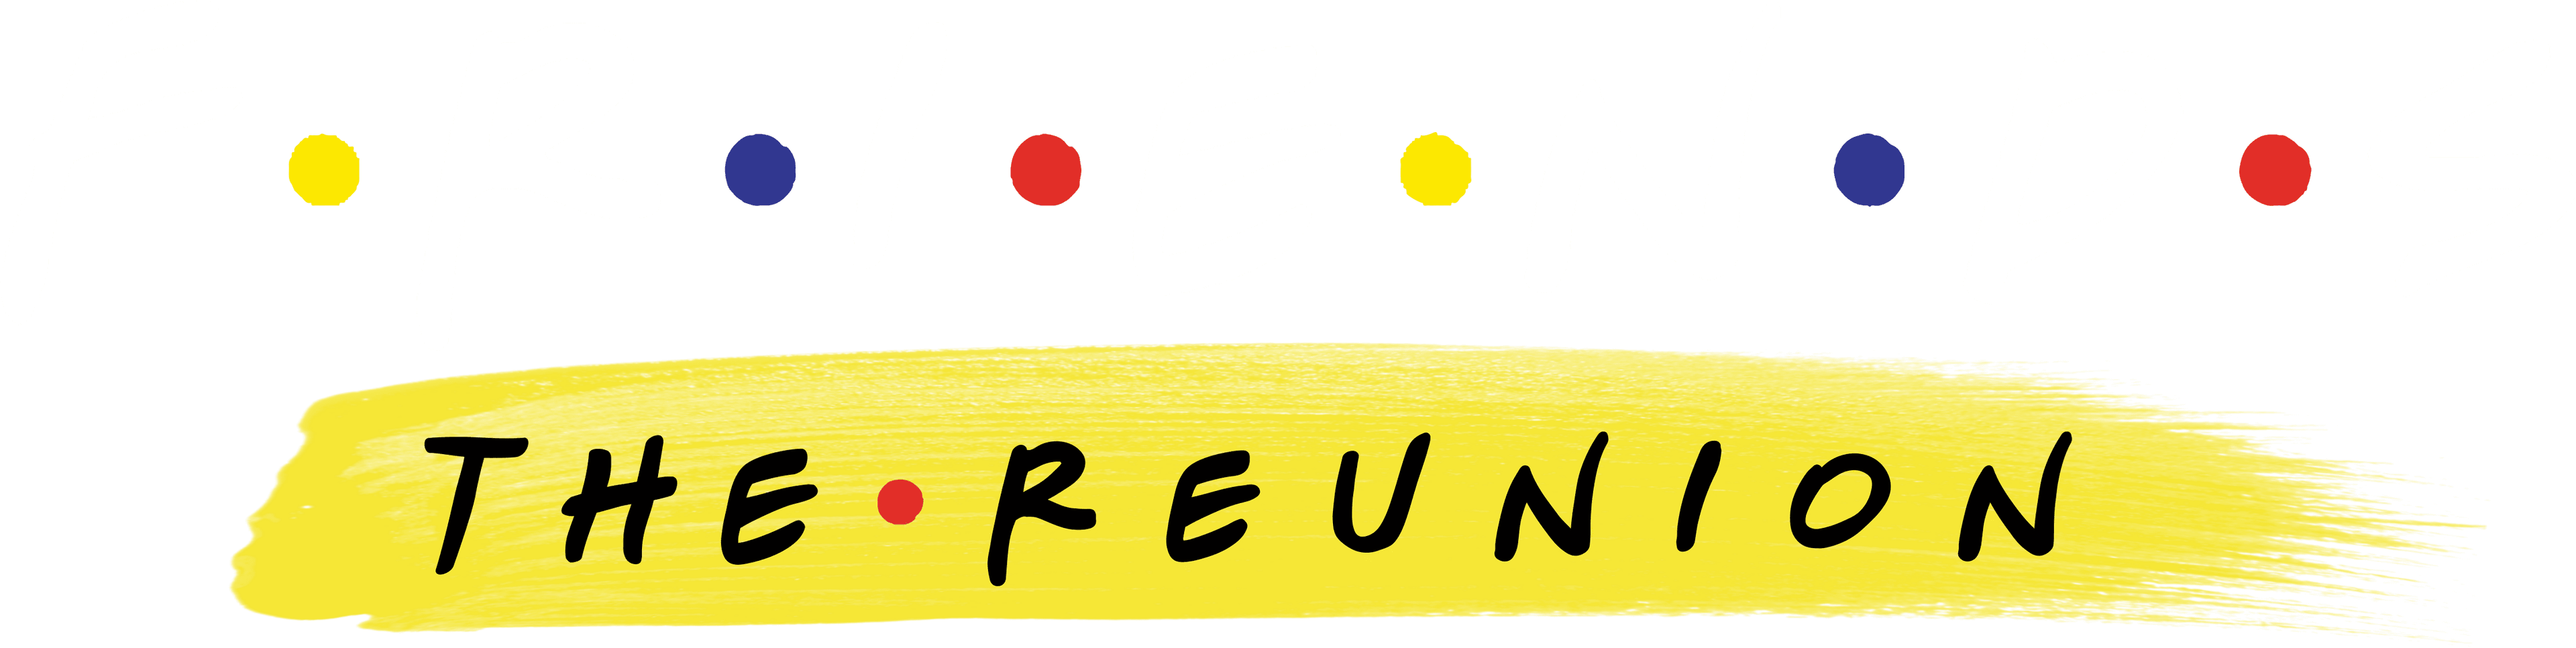 Friends: The Reunion logo